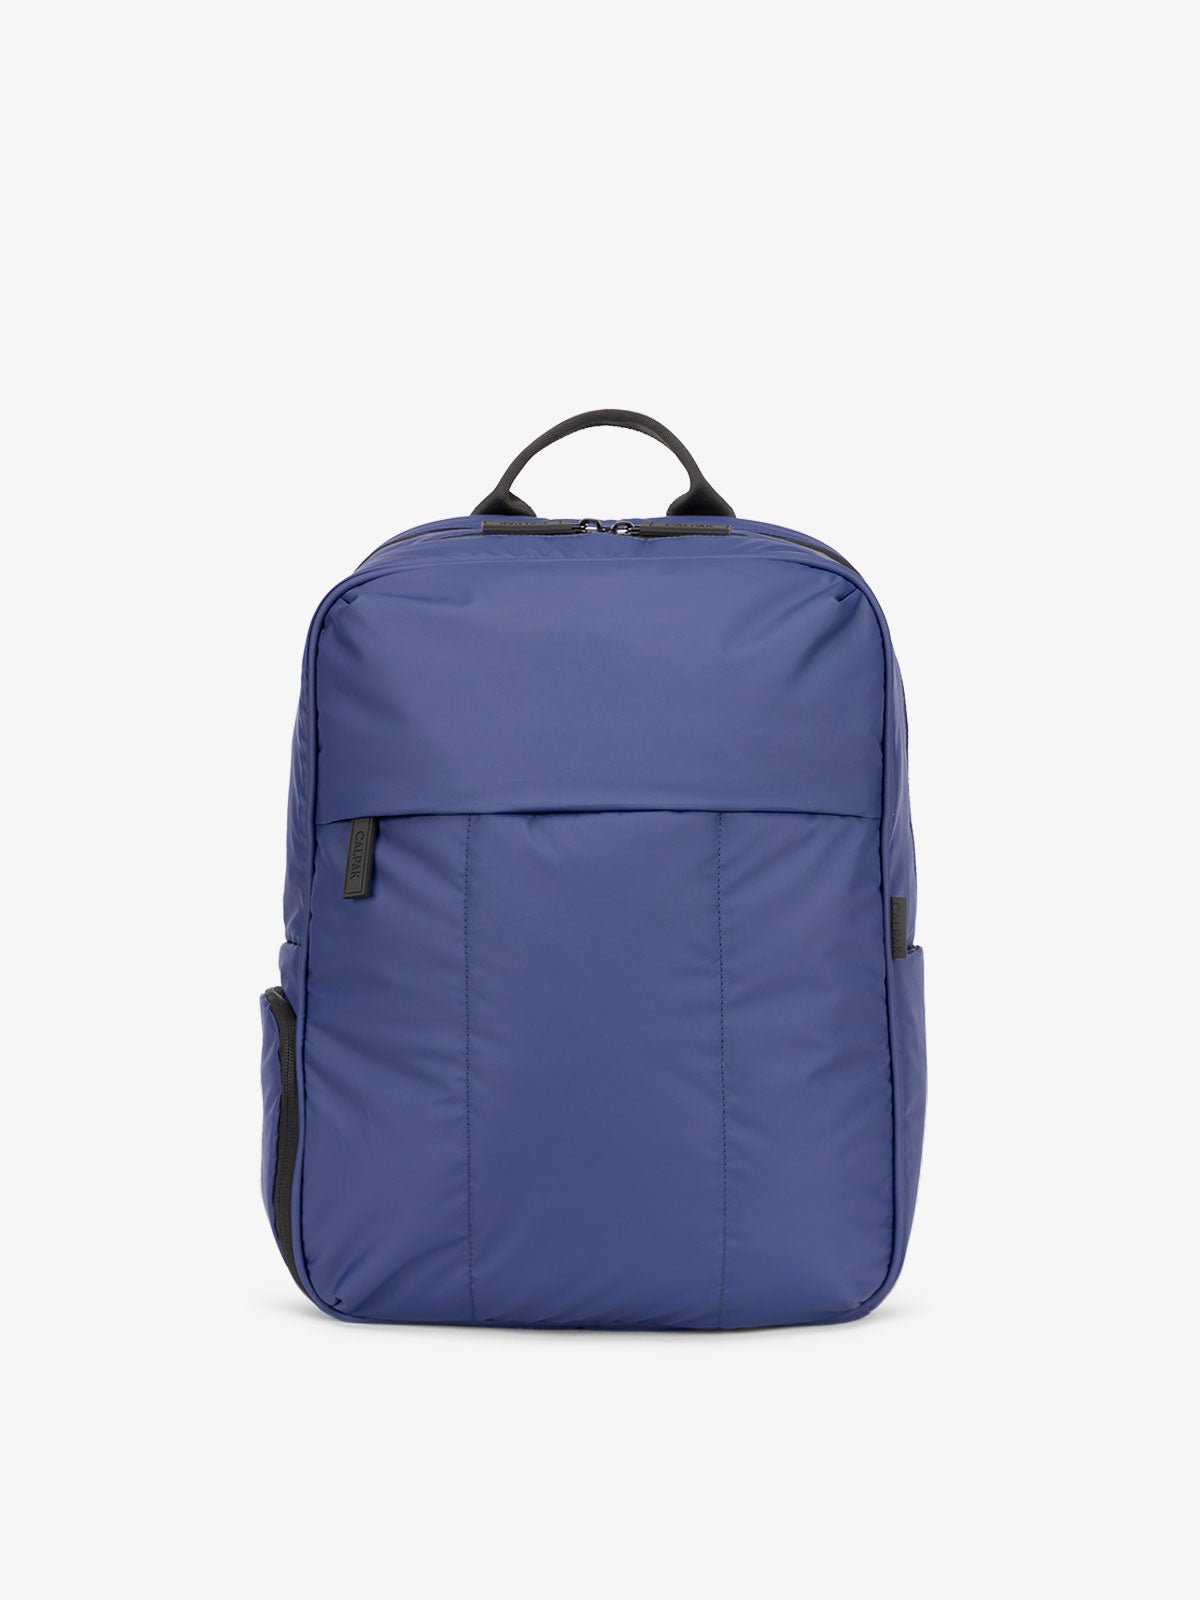 CALPAK Luka Laptop Backpack for school in navy blue